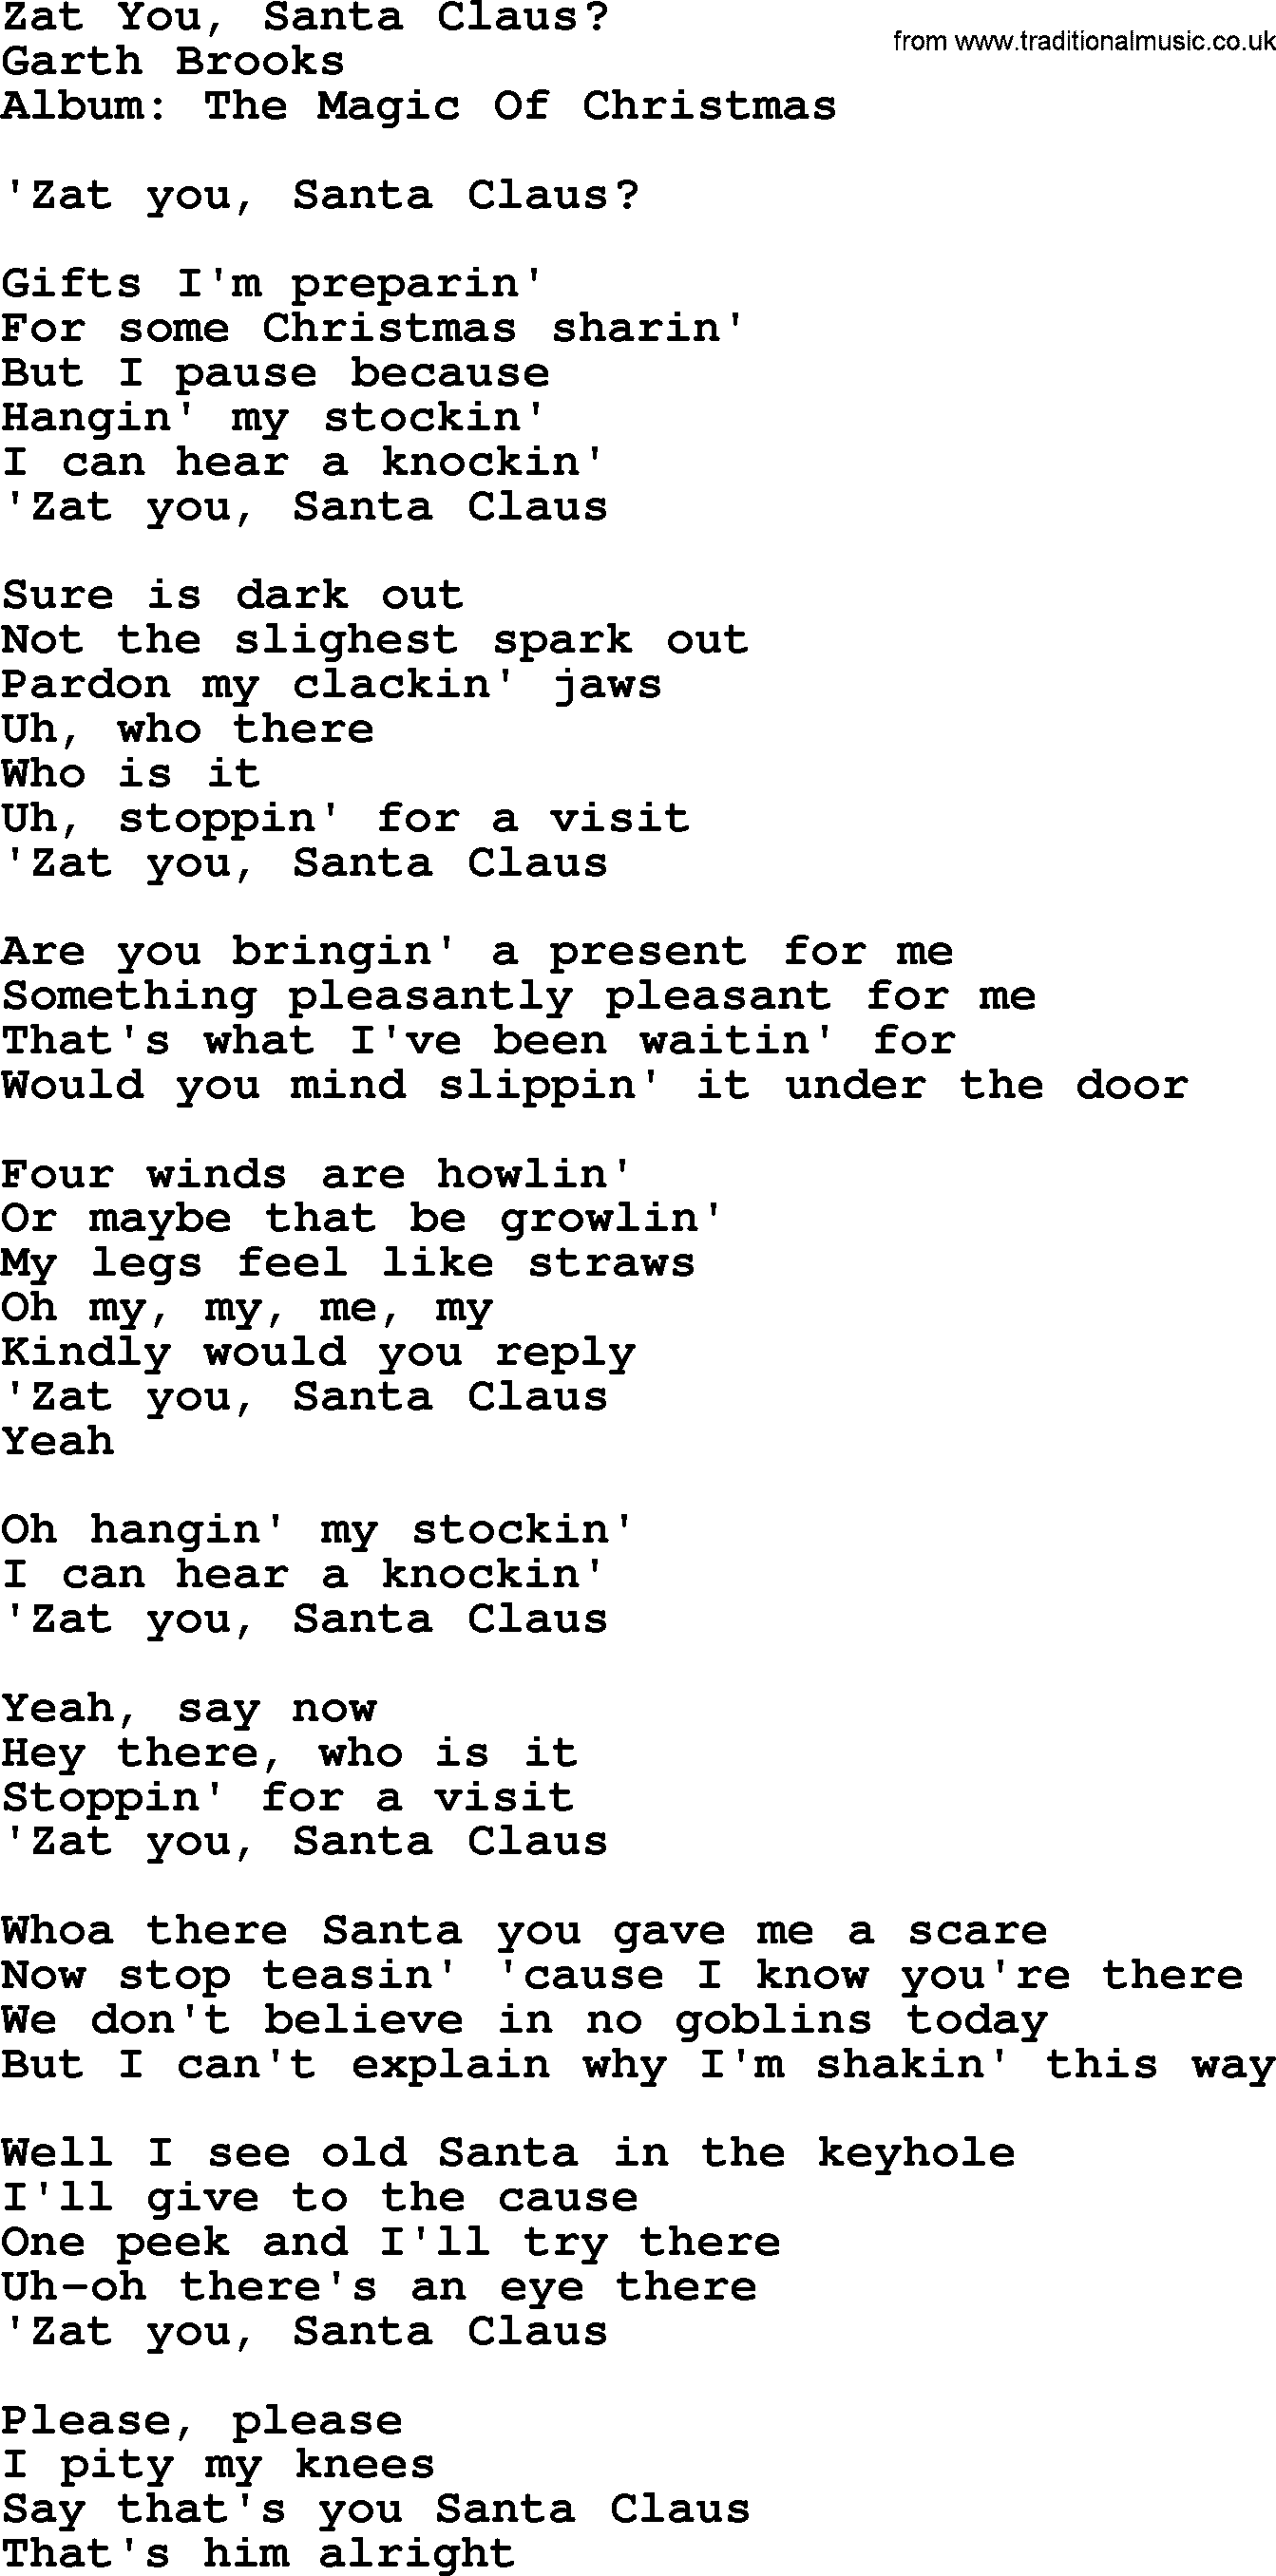 Garth Brooks song: Zat You, Santa Claus, lyrics